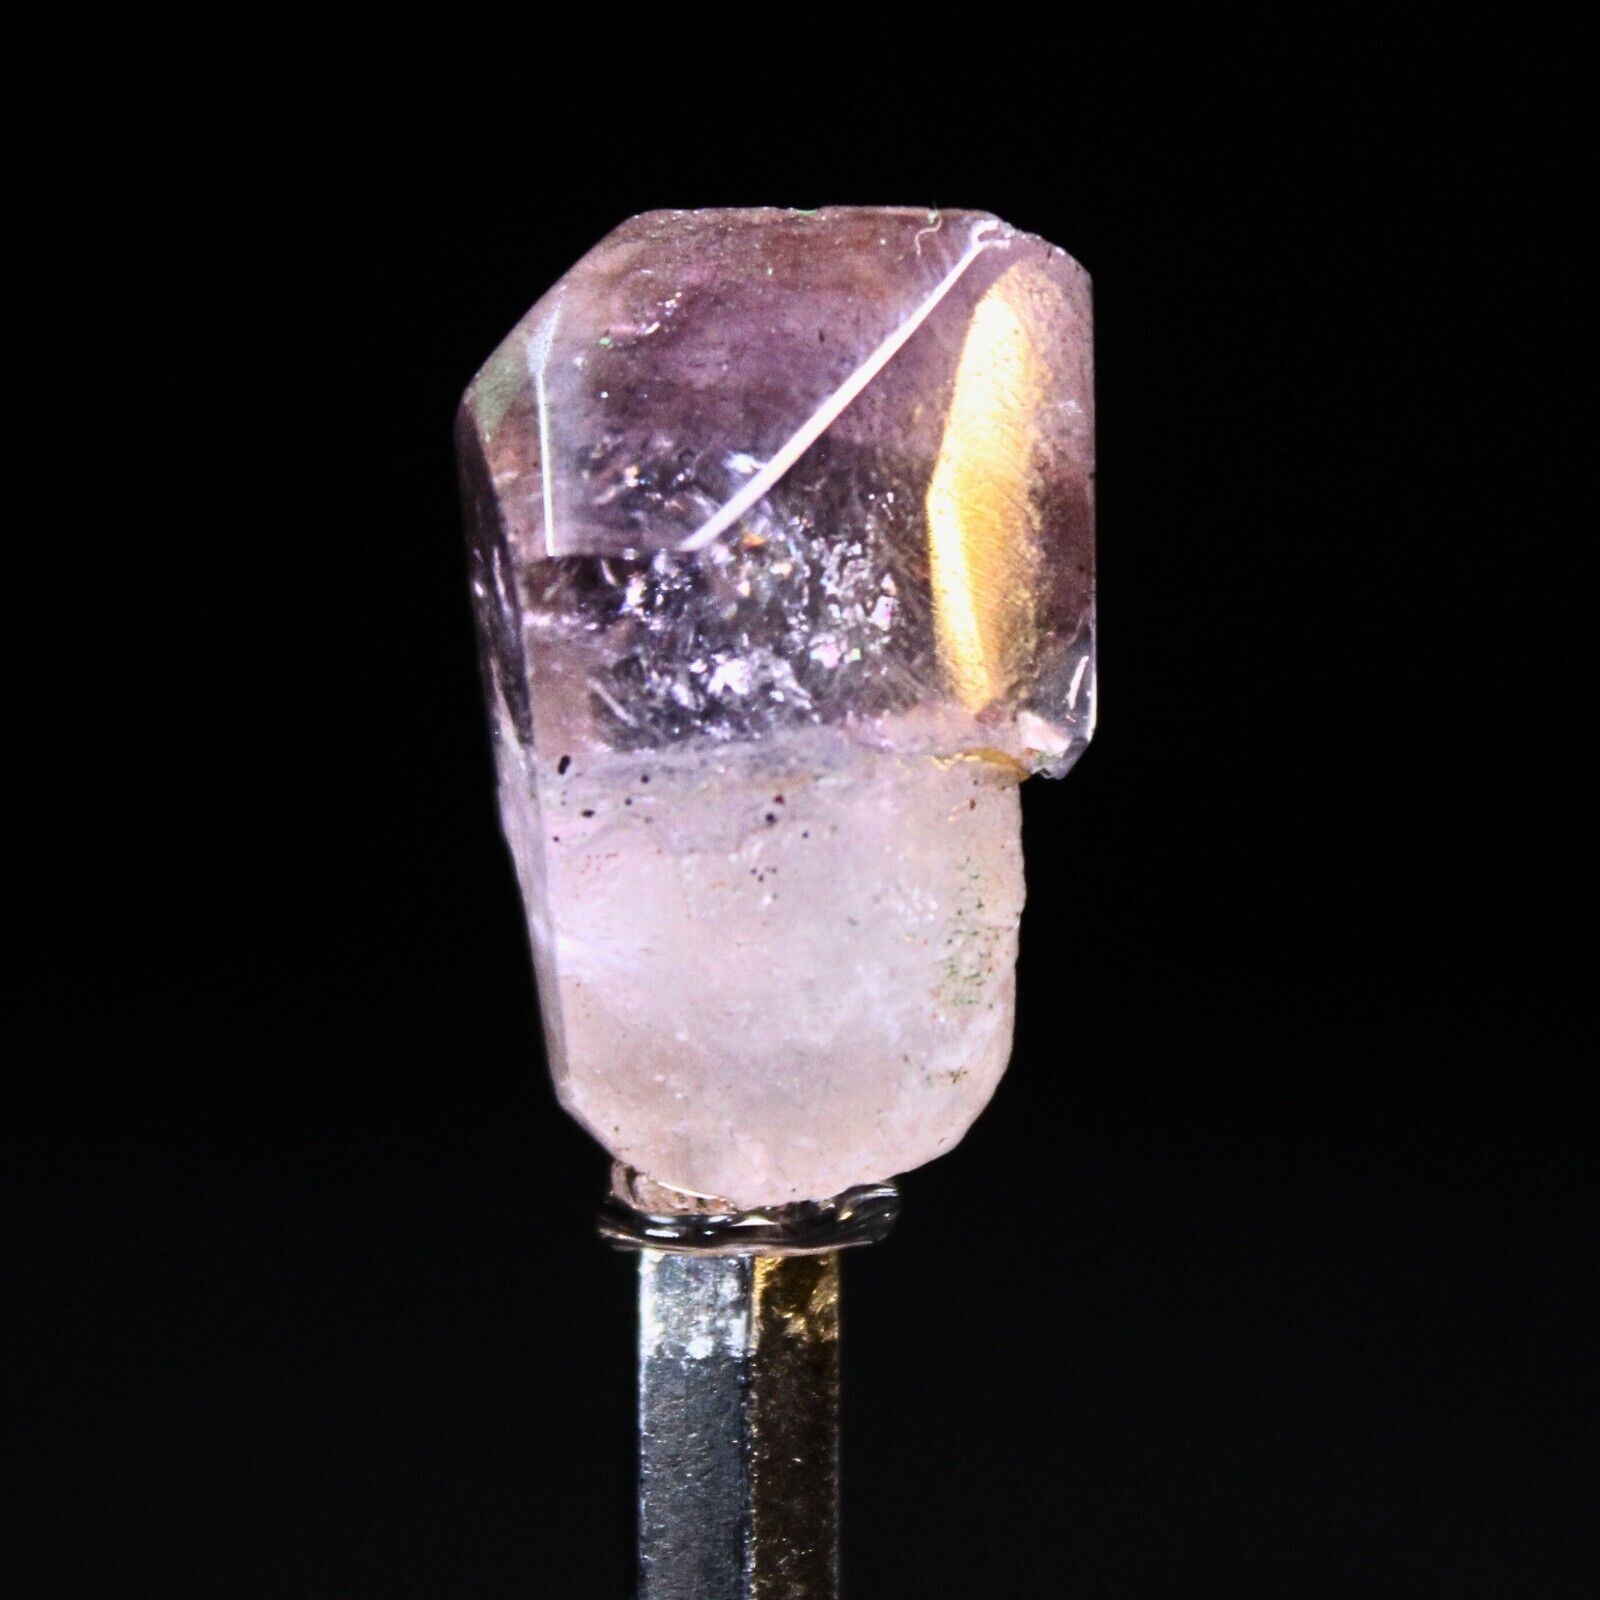 34g Shiny Polished Smokey Scepter Amethyst Healing Crystal Stone gift Glass Stan